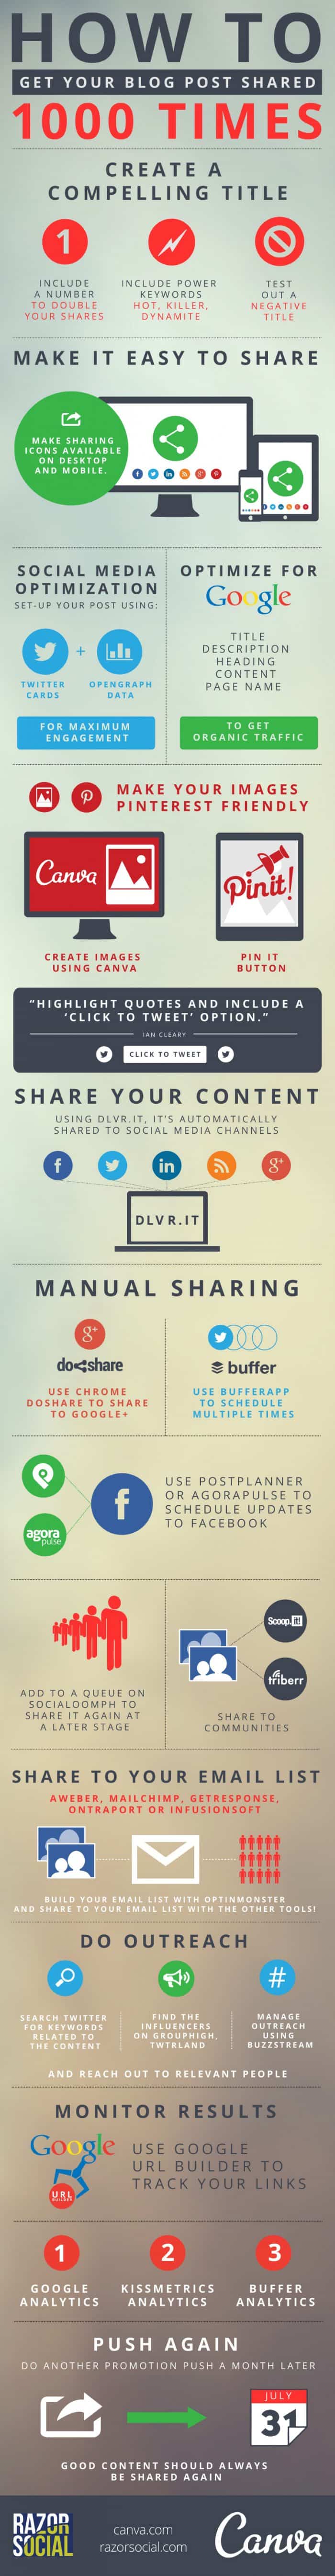 Blog Post Share Infographic